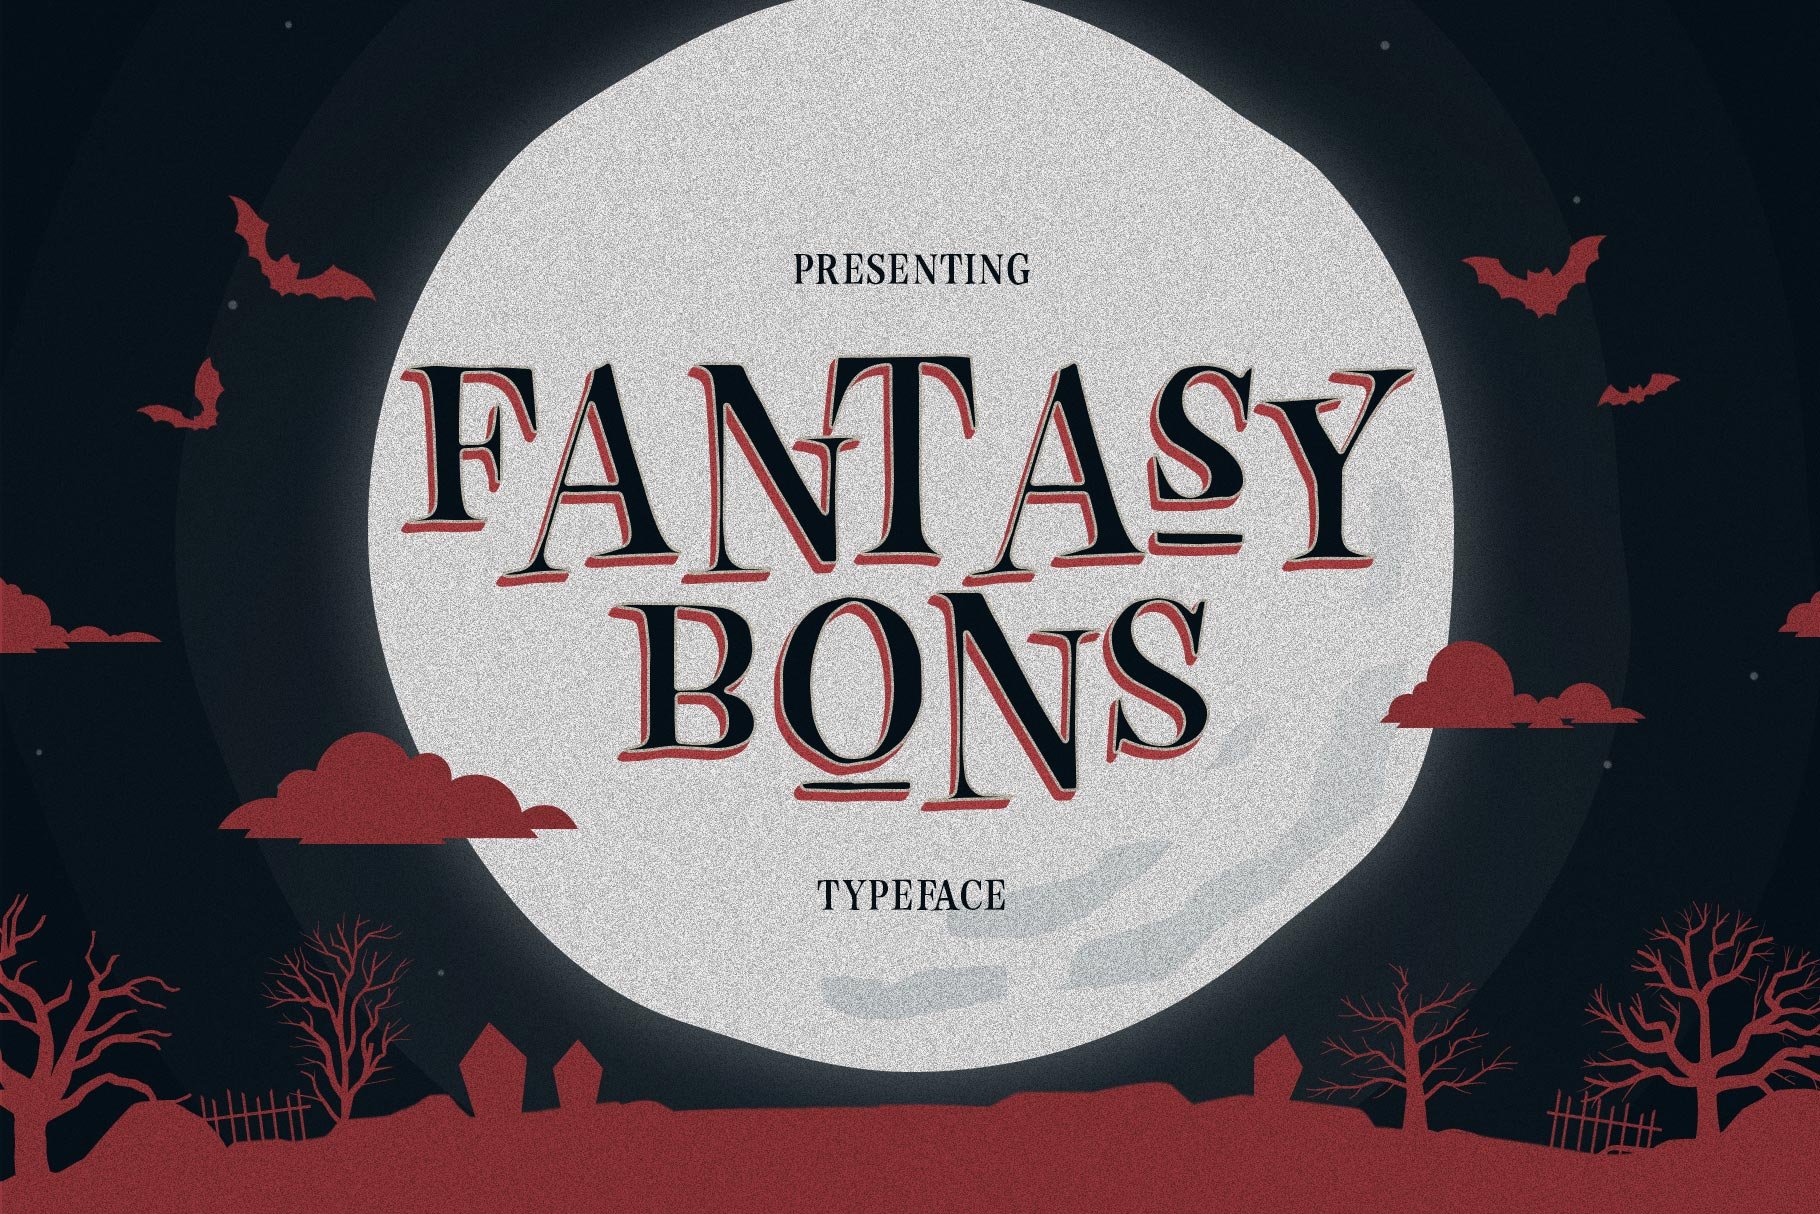 Fantasy Bons cover image.